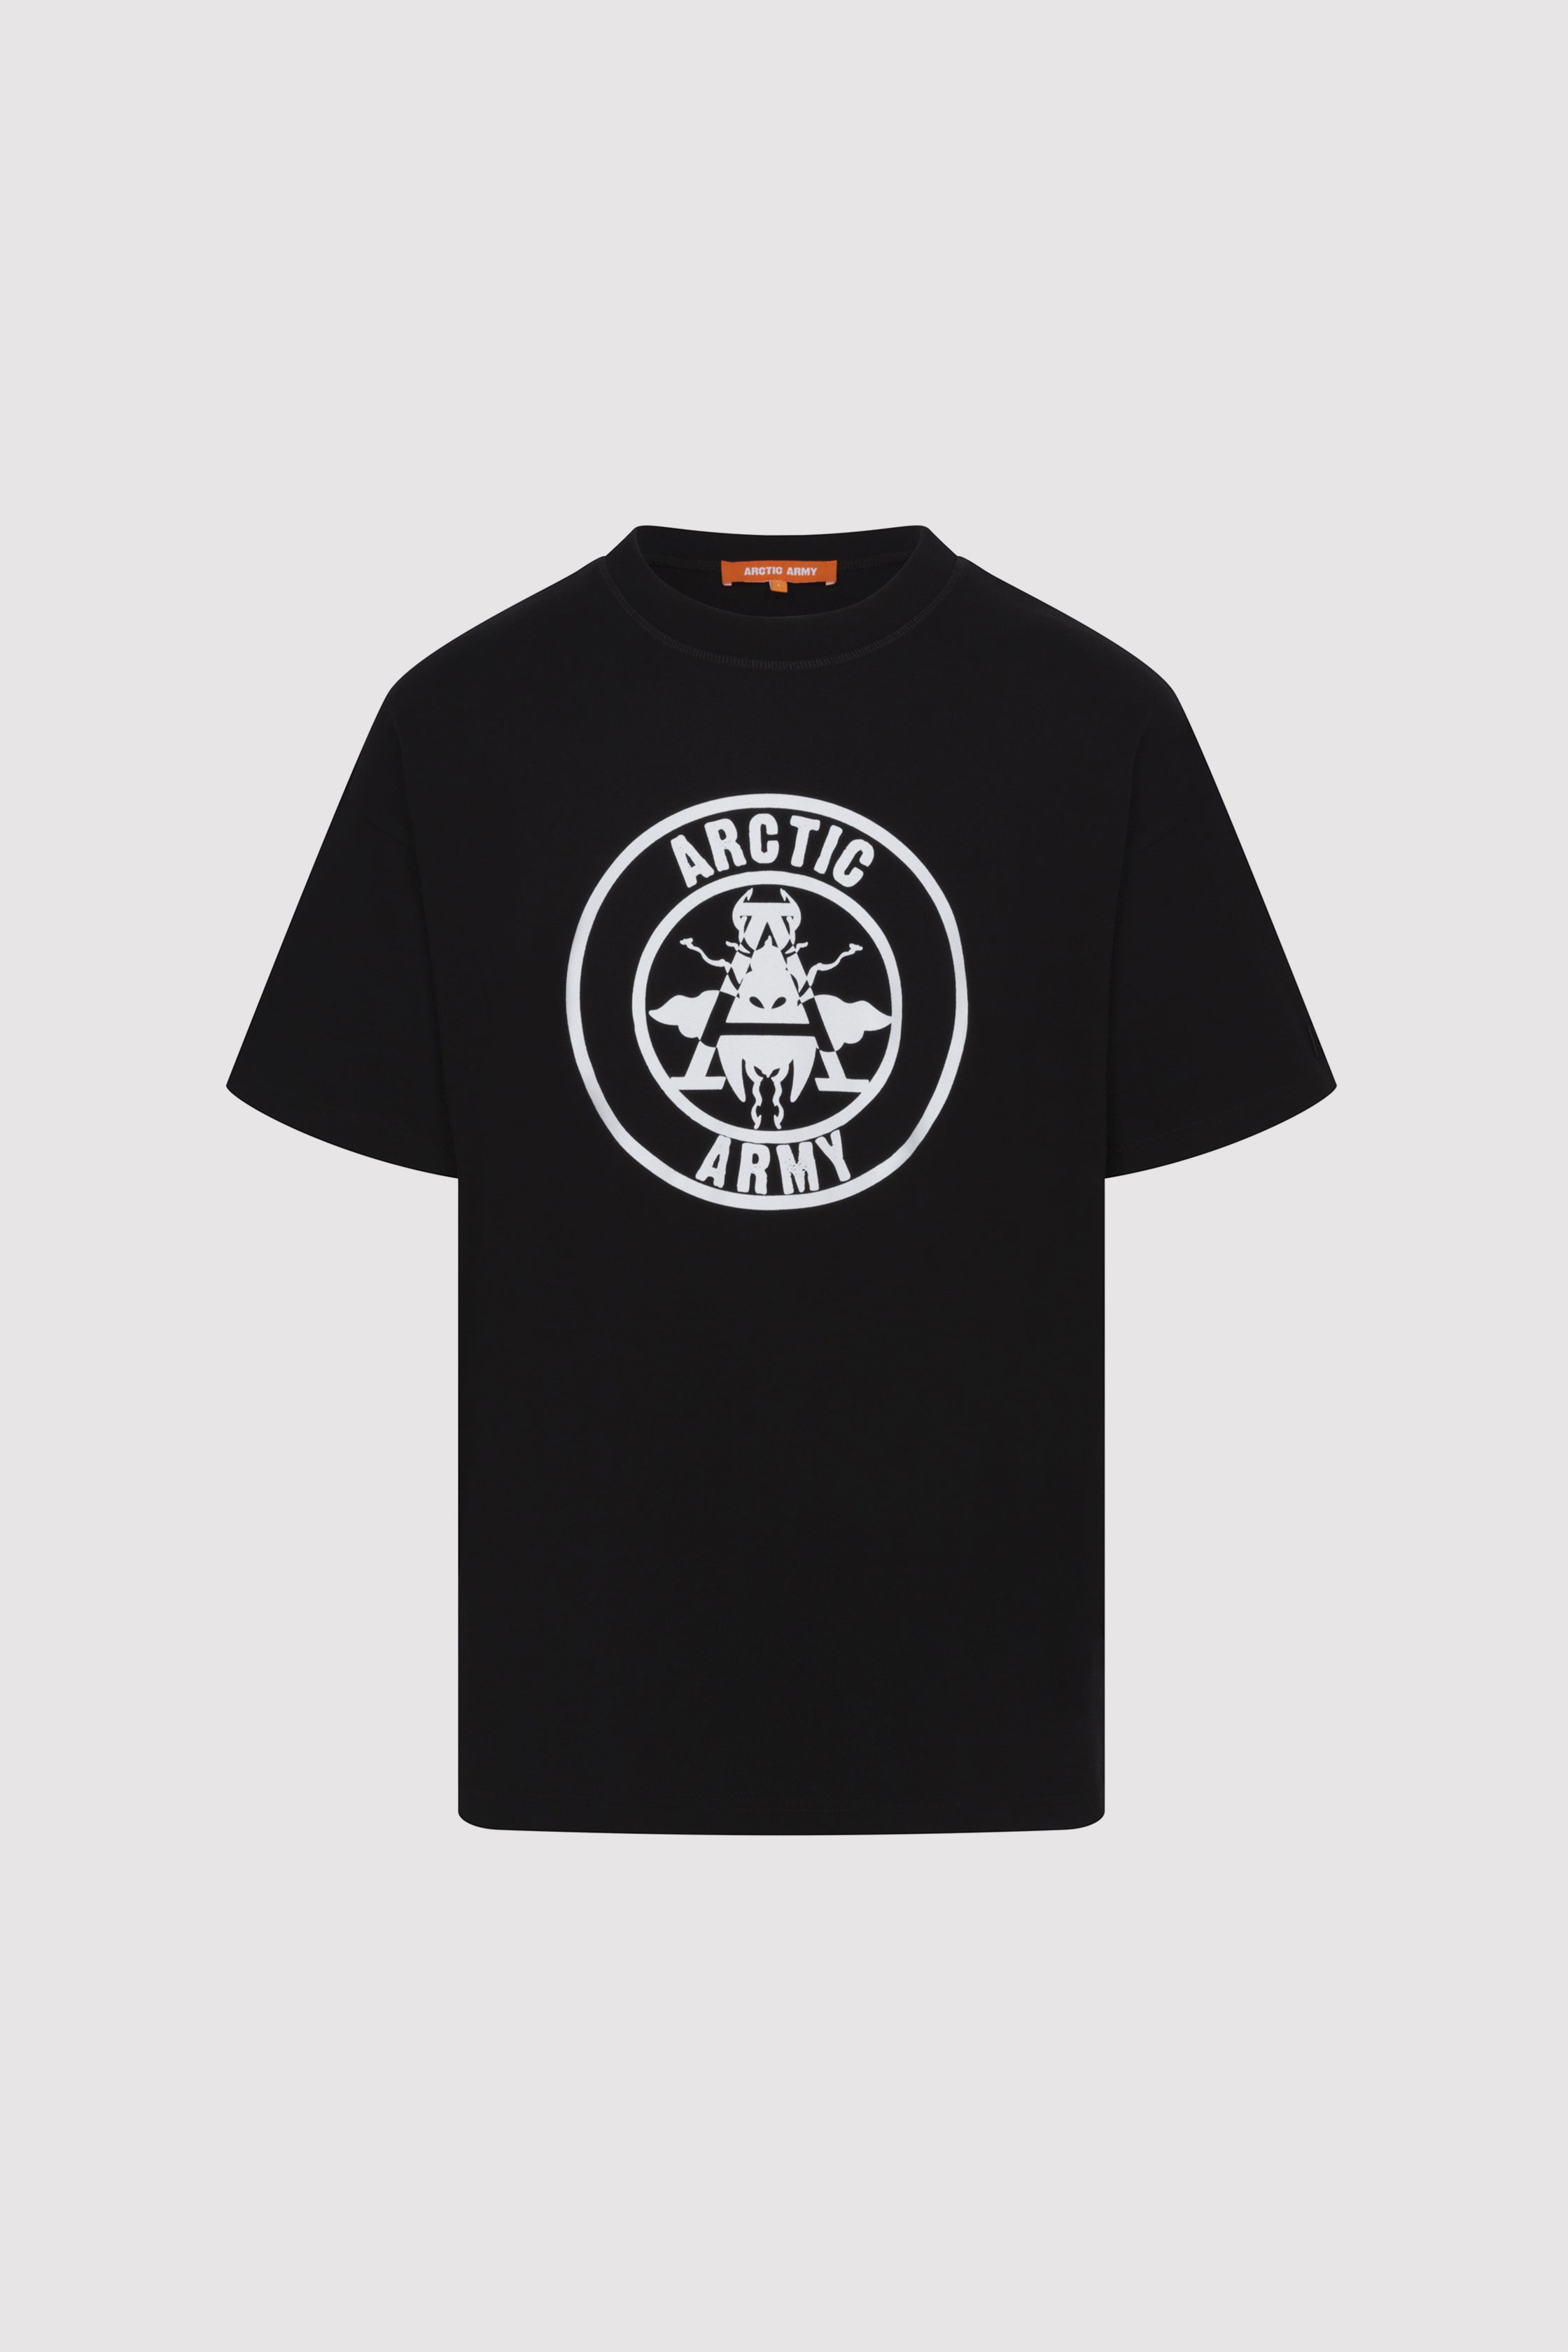 Arctic Army Black Logo Oversized T-Shirt